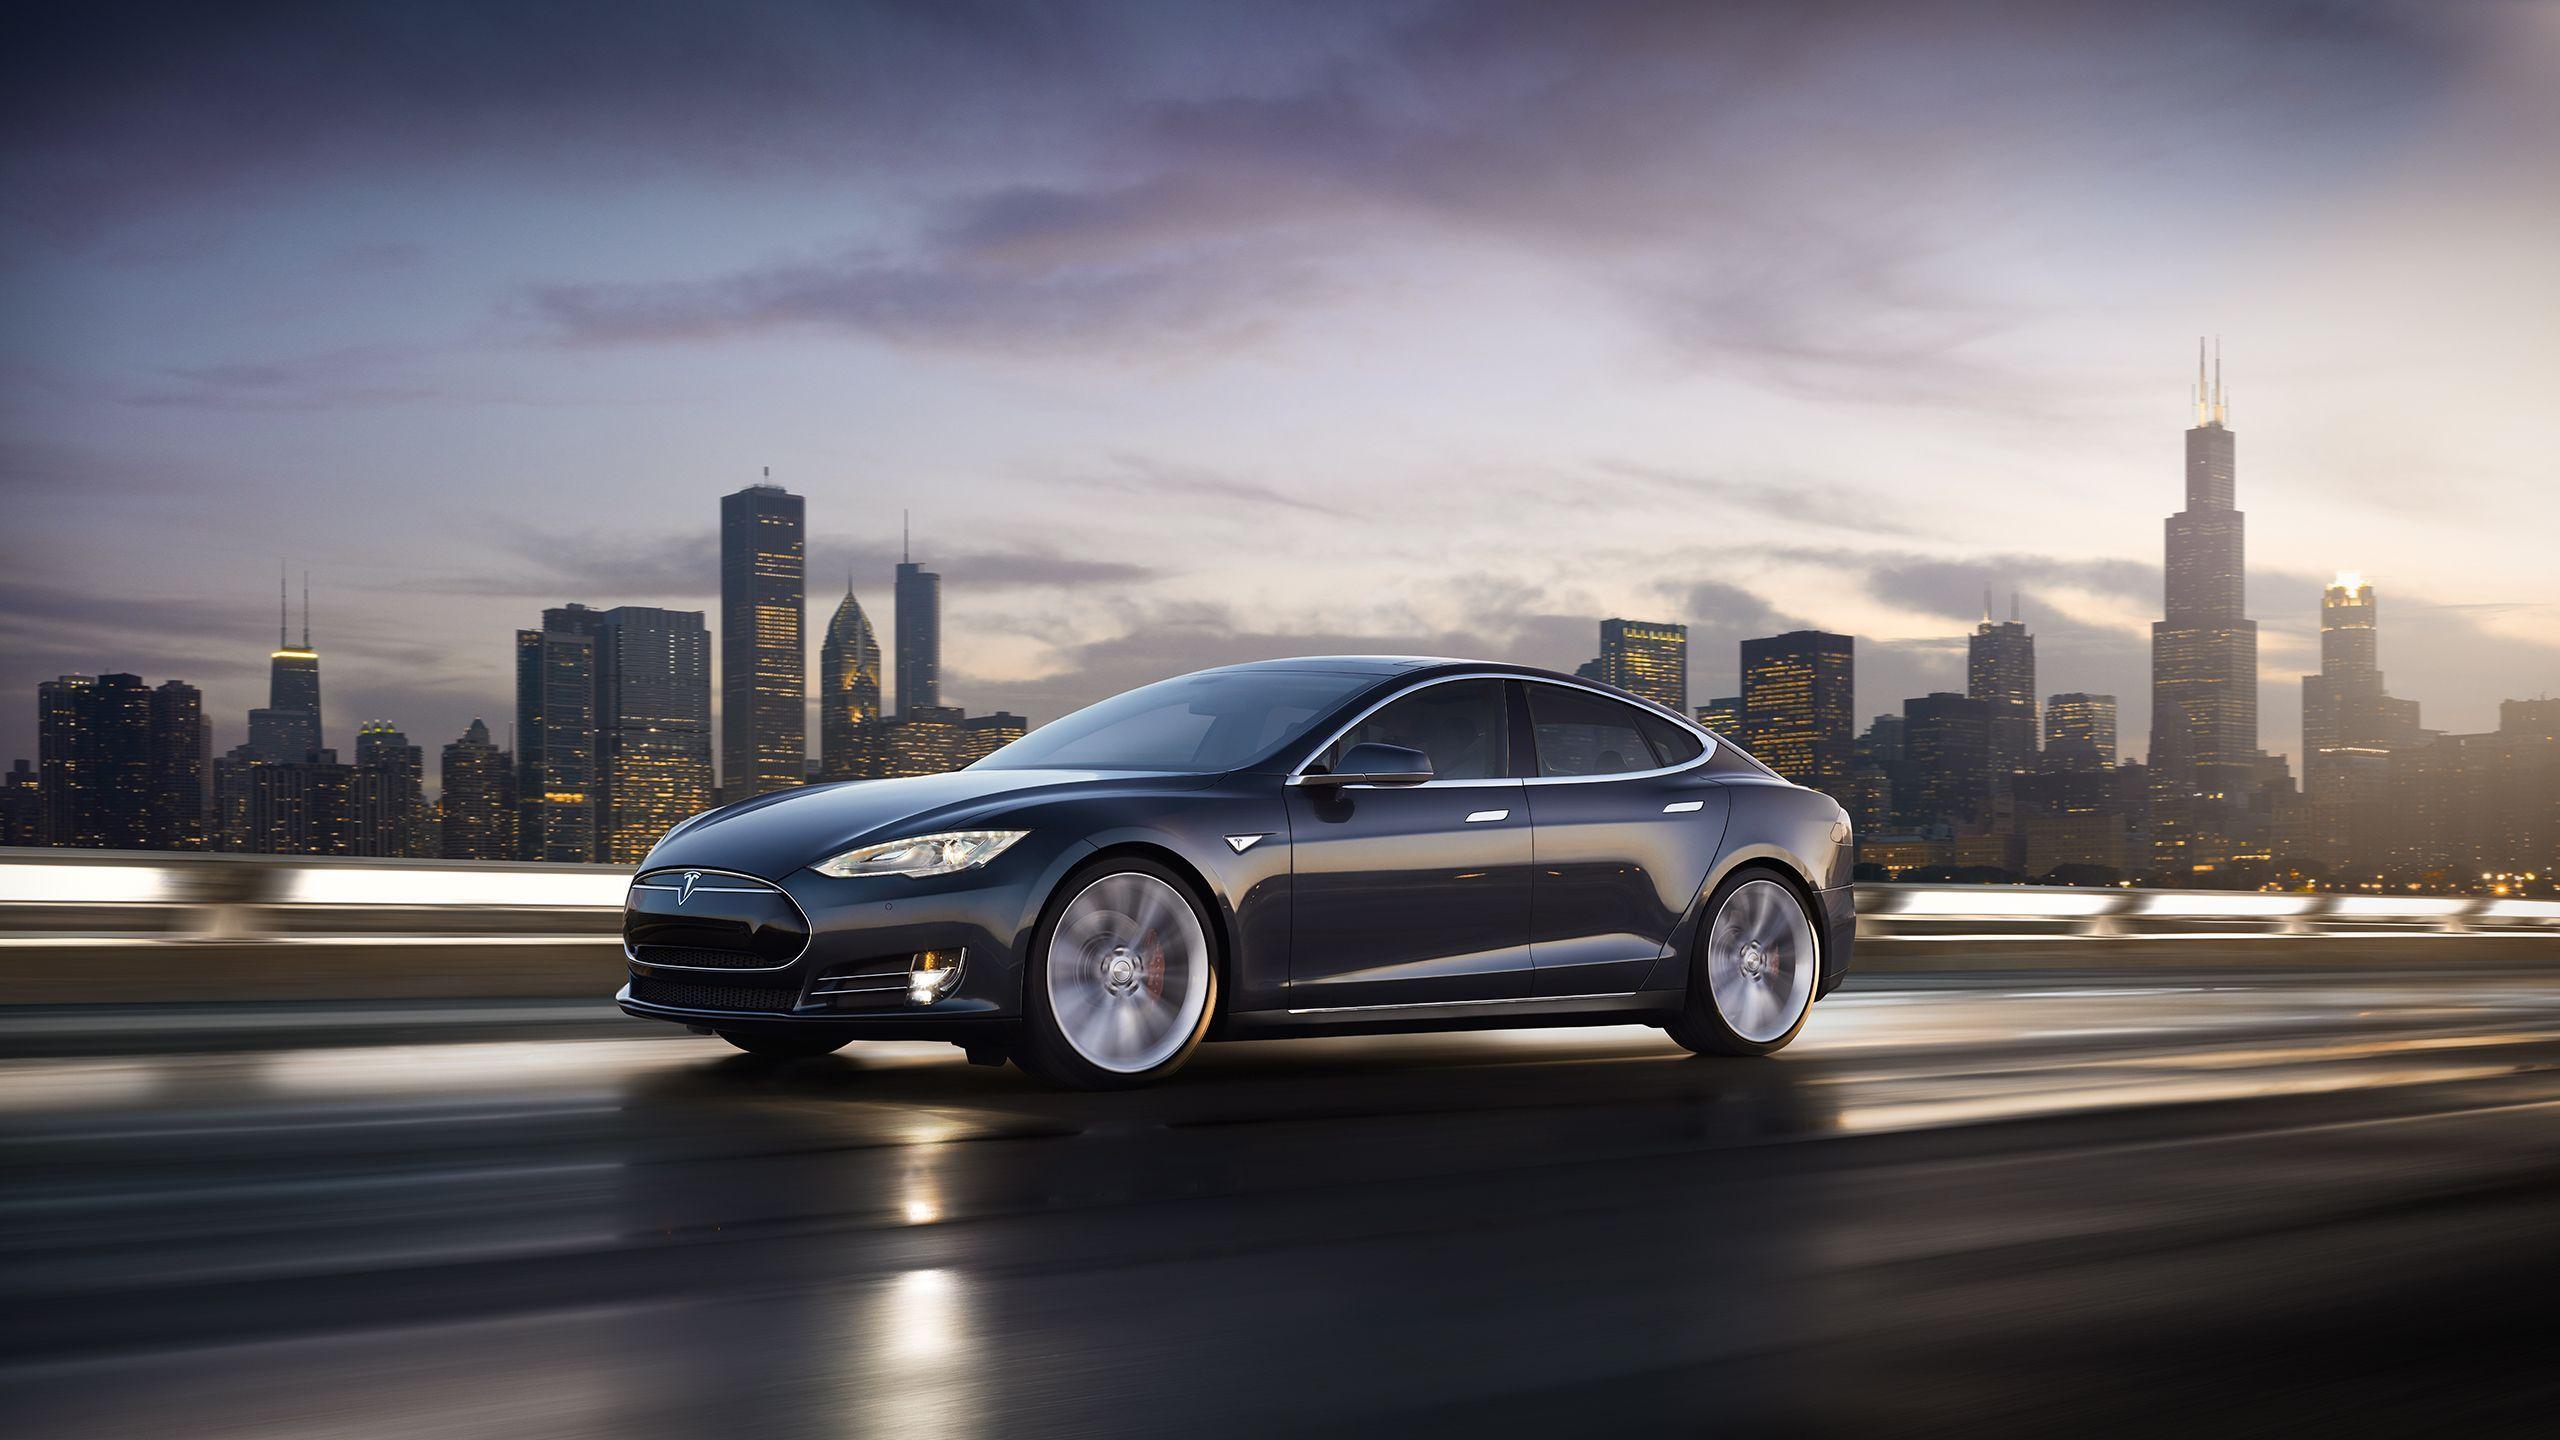 Tesla Car Hd Images